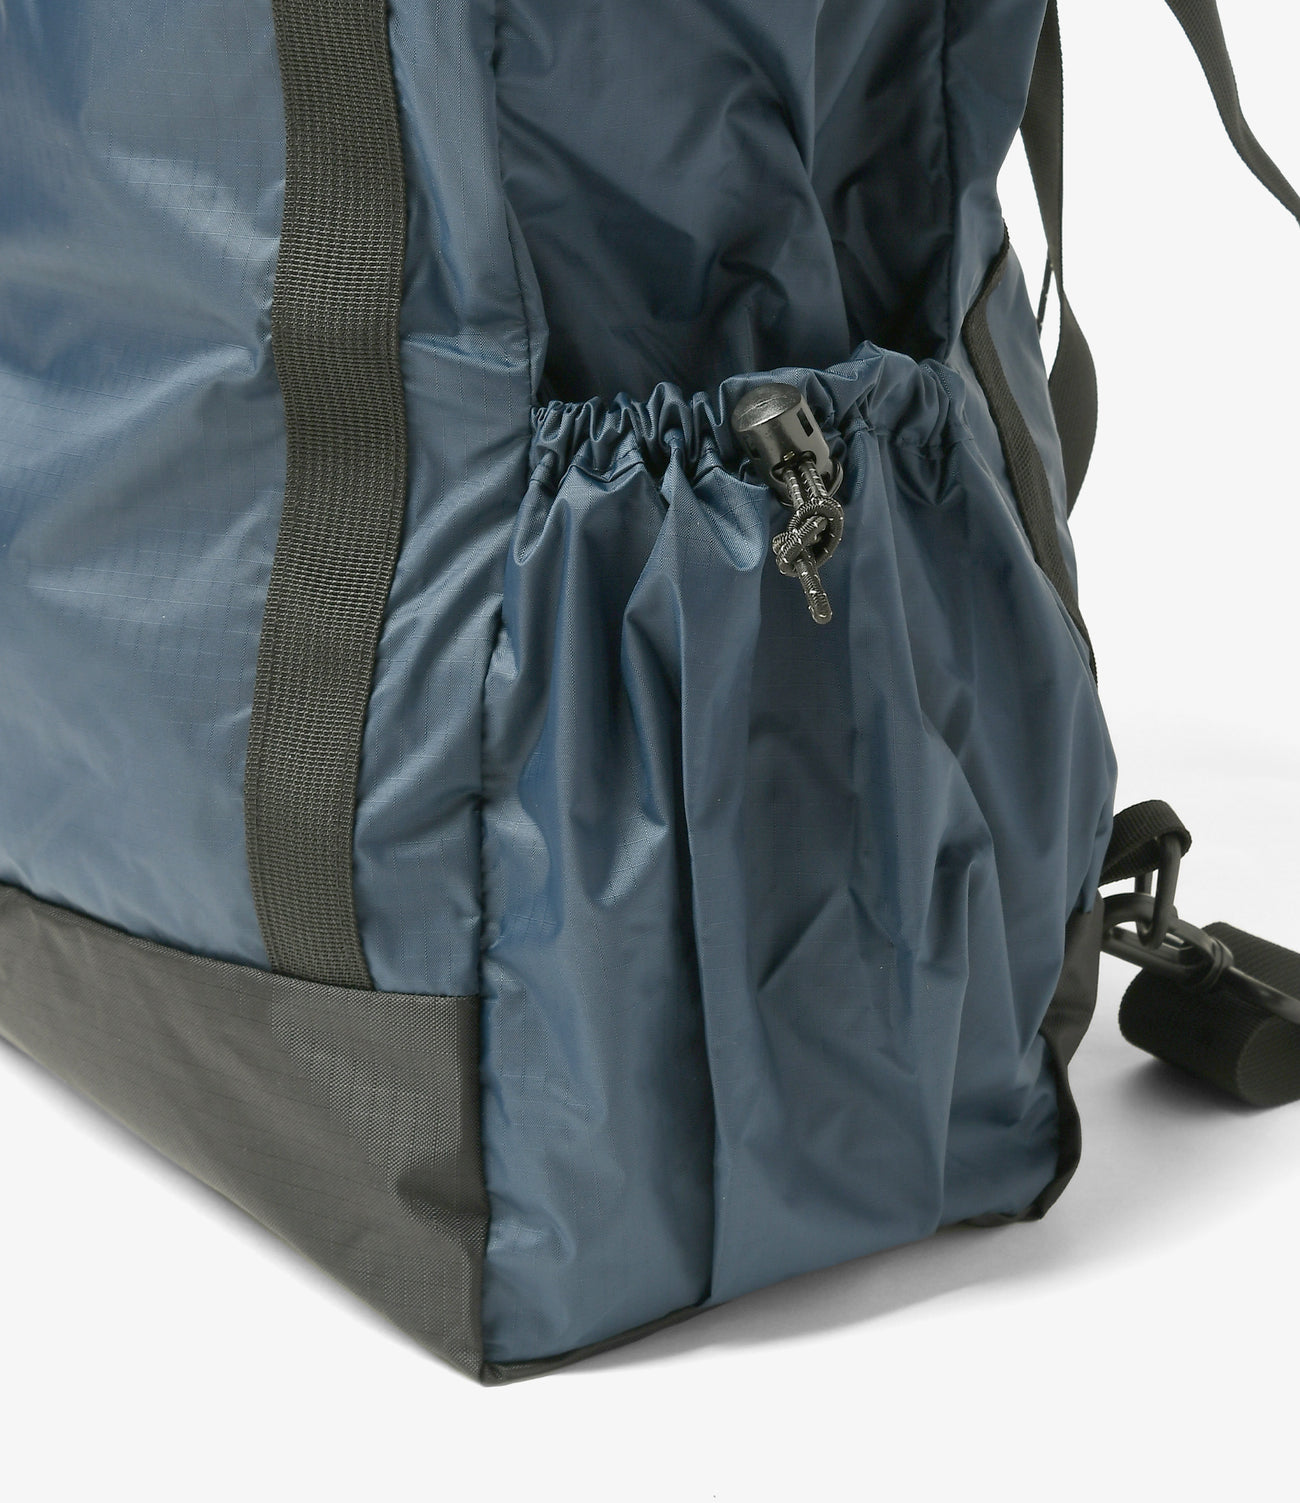 Engineered Garments UL 3 Way Bag - Nylon Ripstop